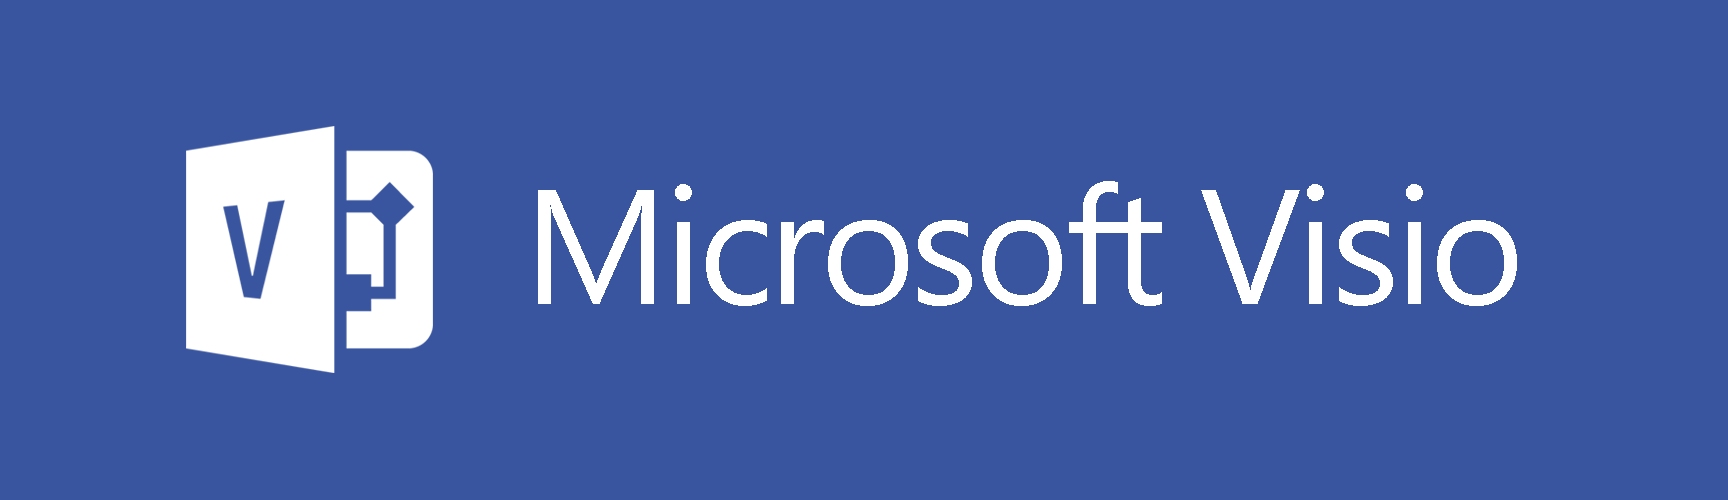 Download Microsoft Visio 2016